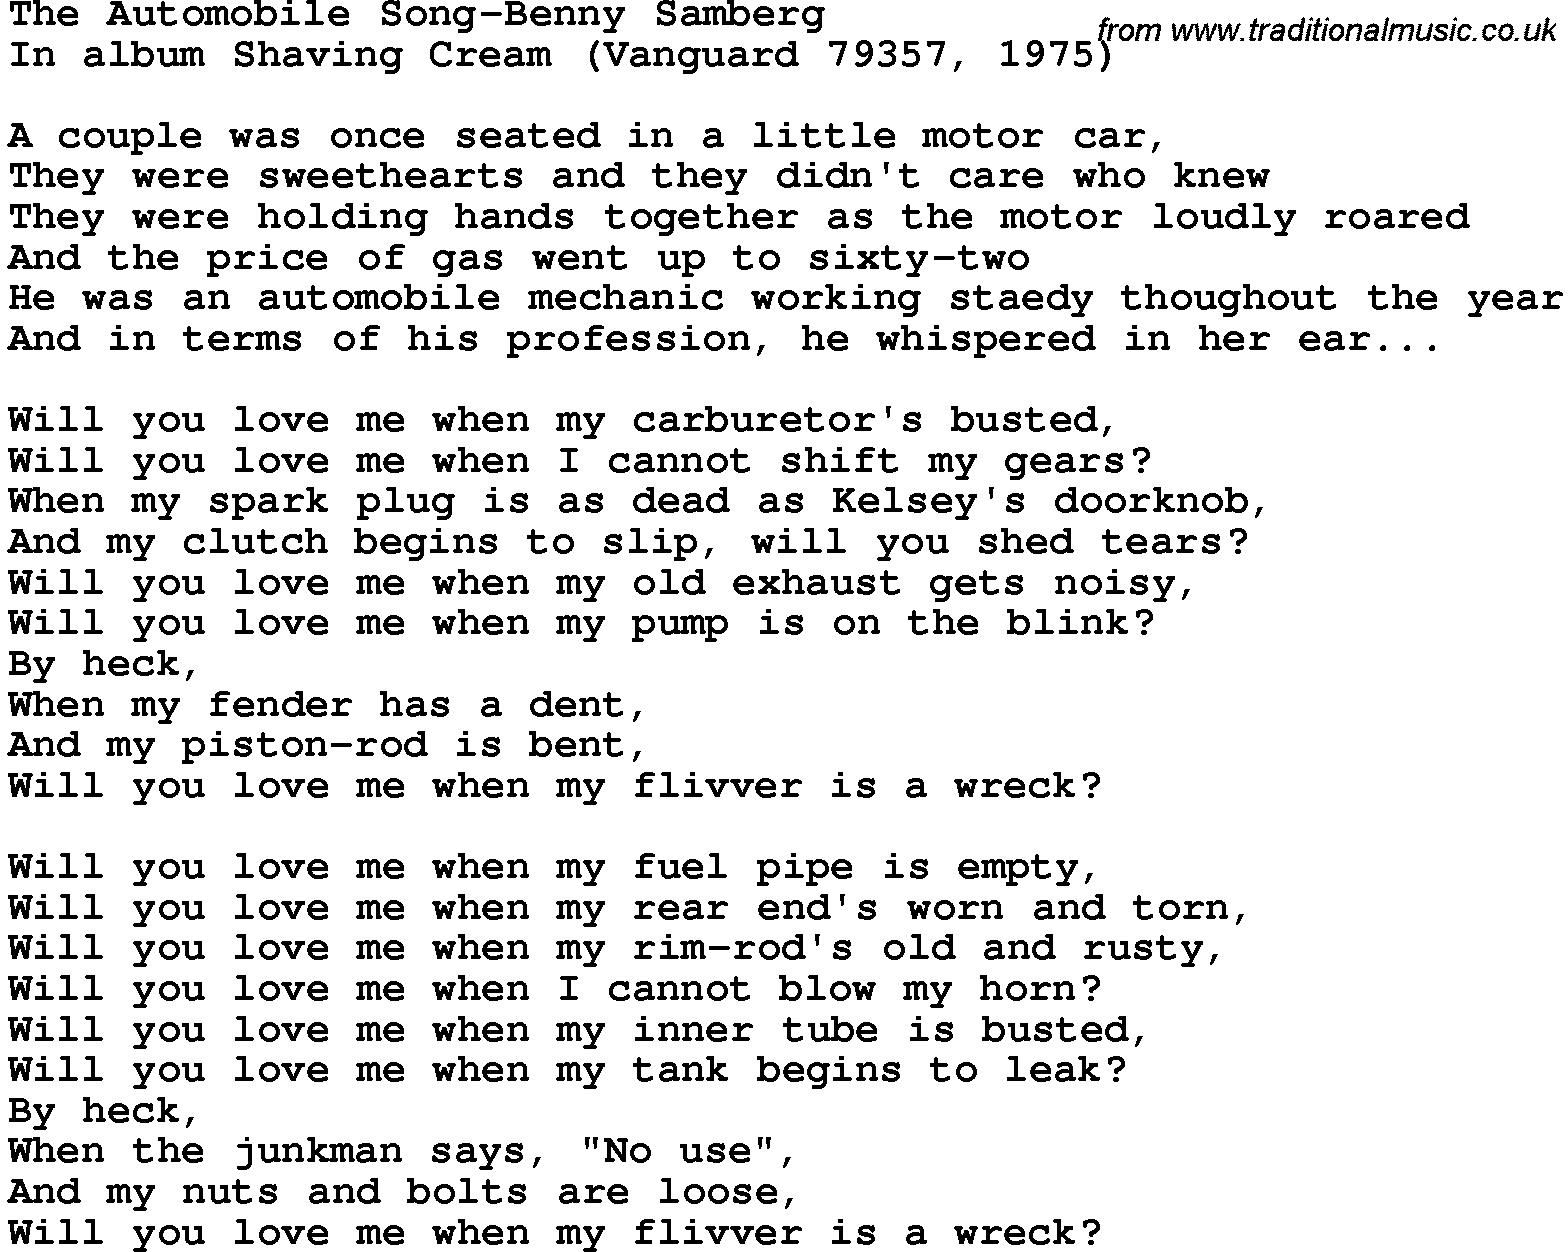 Novelty song: The Automobile Song-Benny Samberg lyrics